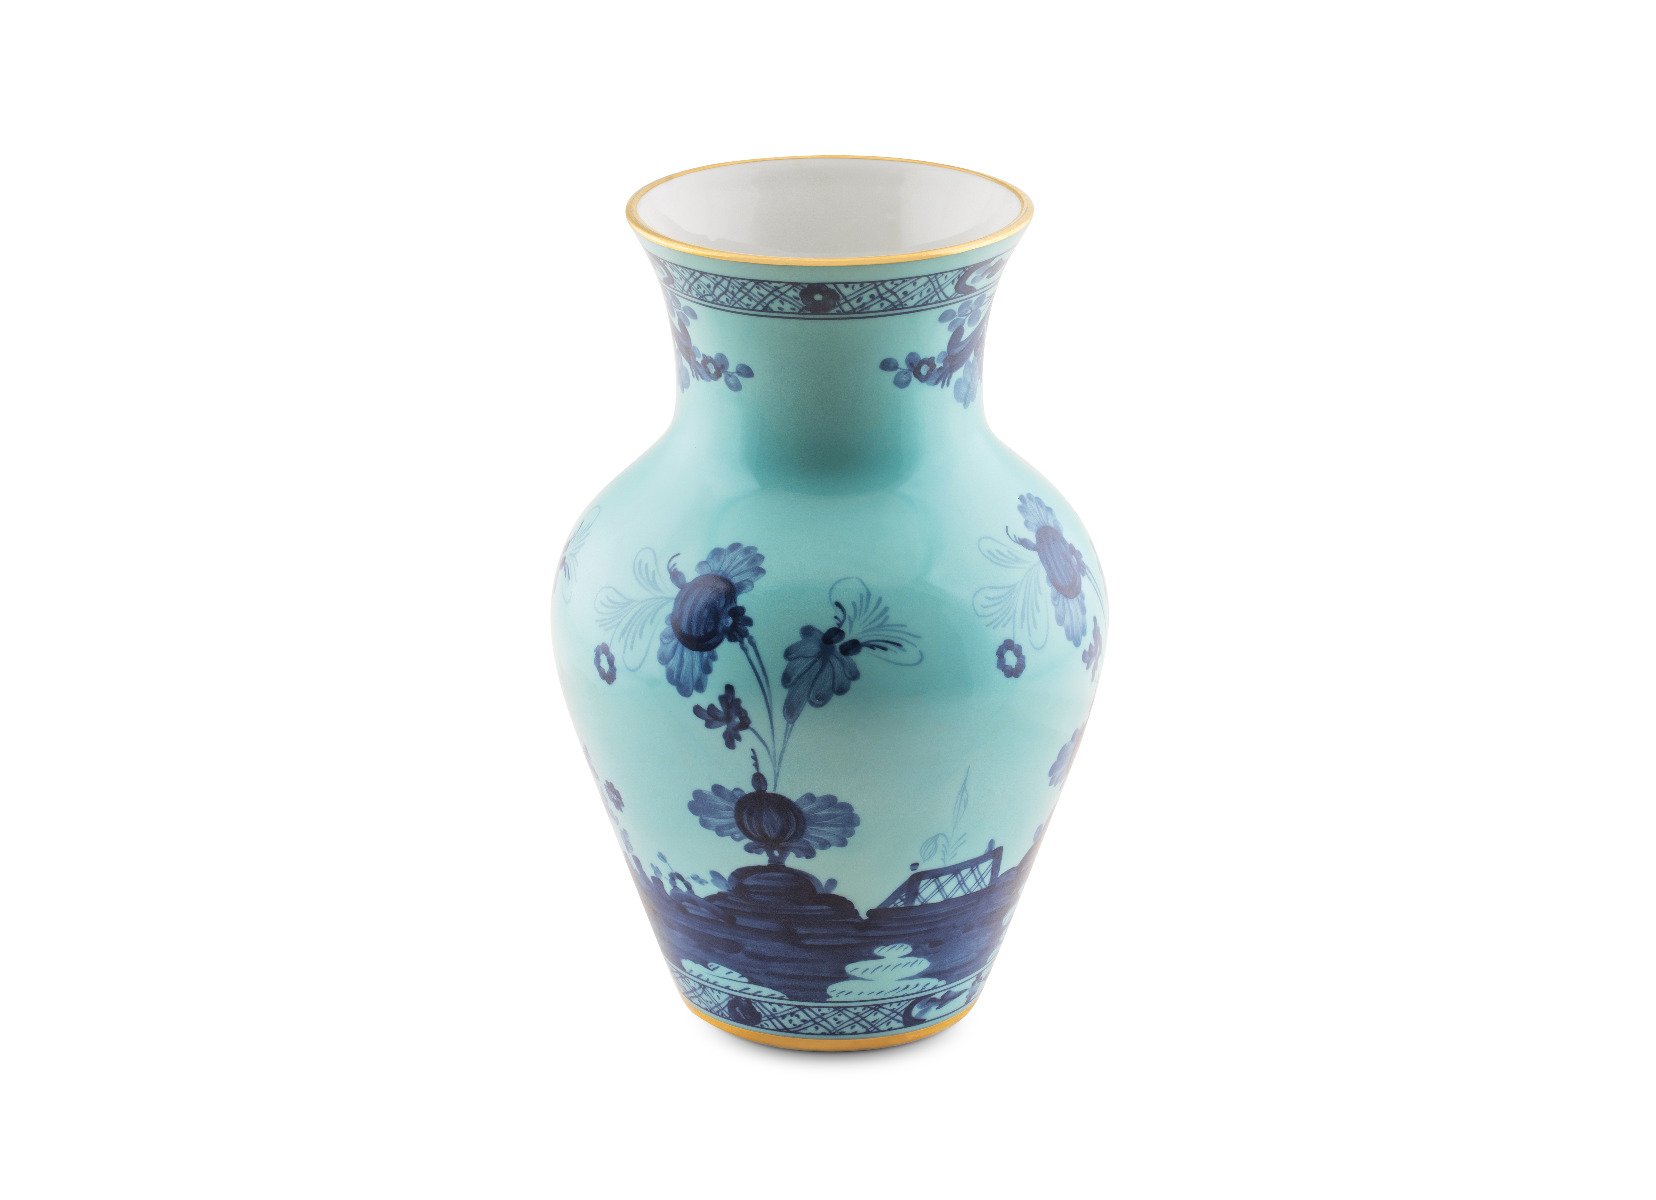 Richard Ginori 1735 "Oriente Italiano" Iris Ming Vase